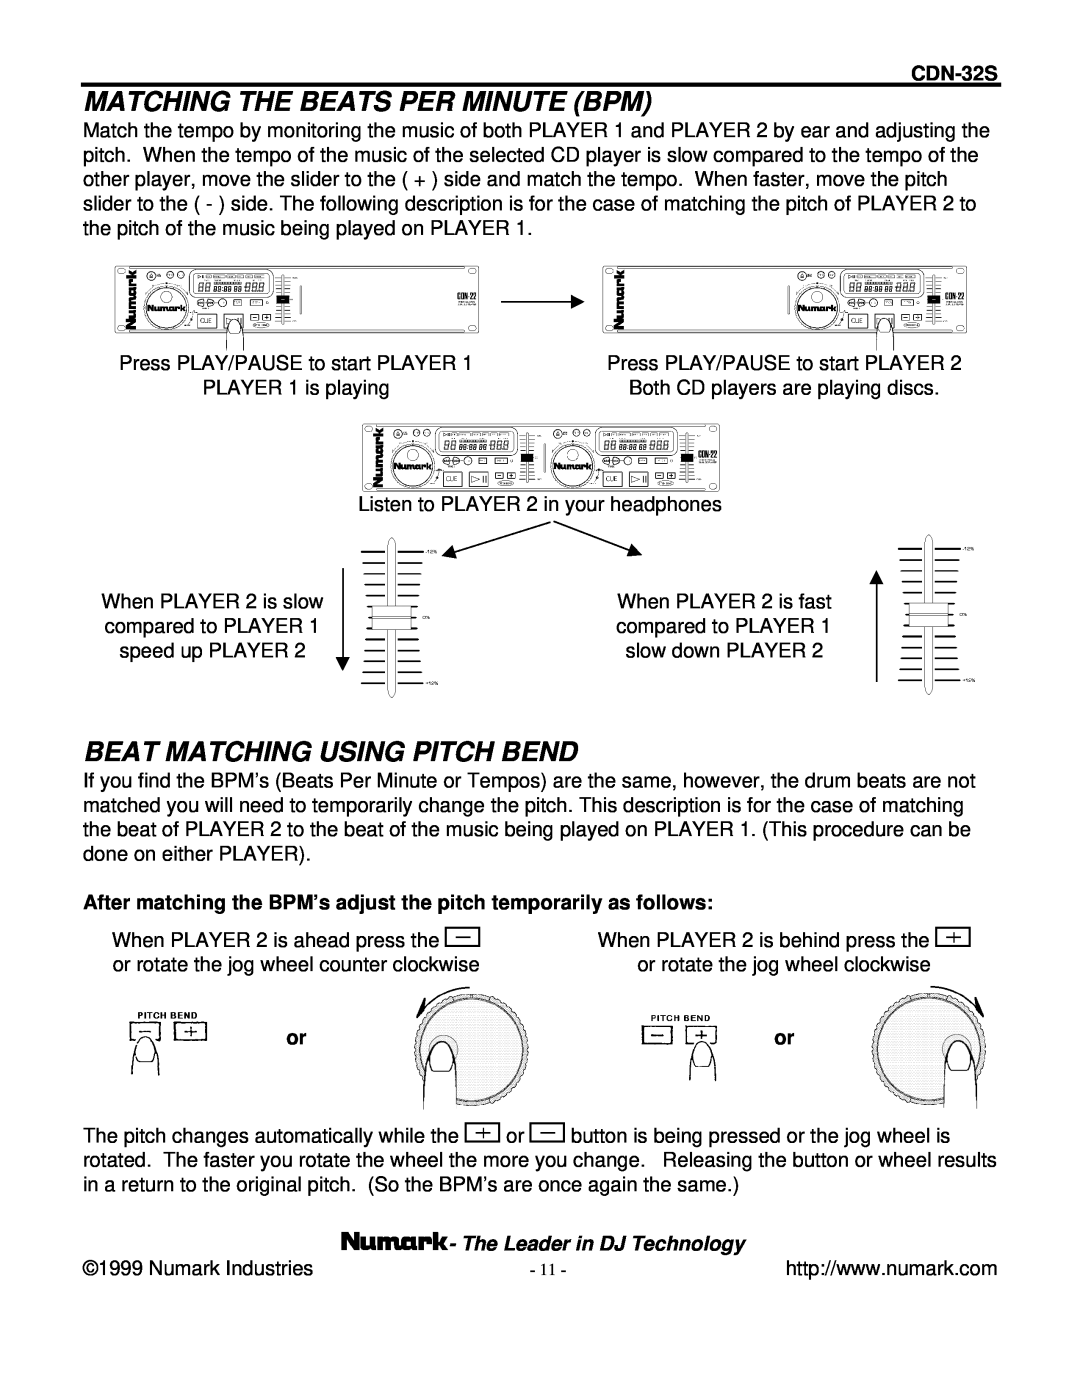 Numark Industries CDN-32S Matching The Beats Per Minute Bpm, Beat Matching Using Pitch Bend, The Leader in DJ Technology 